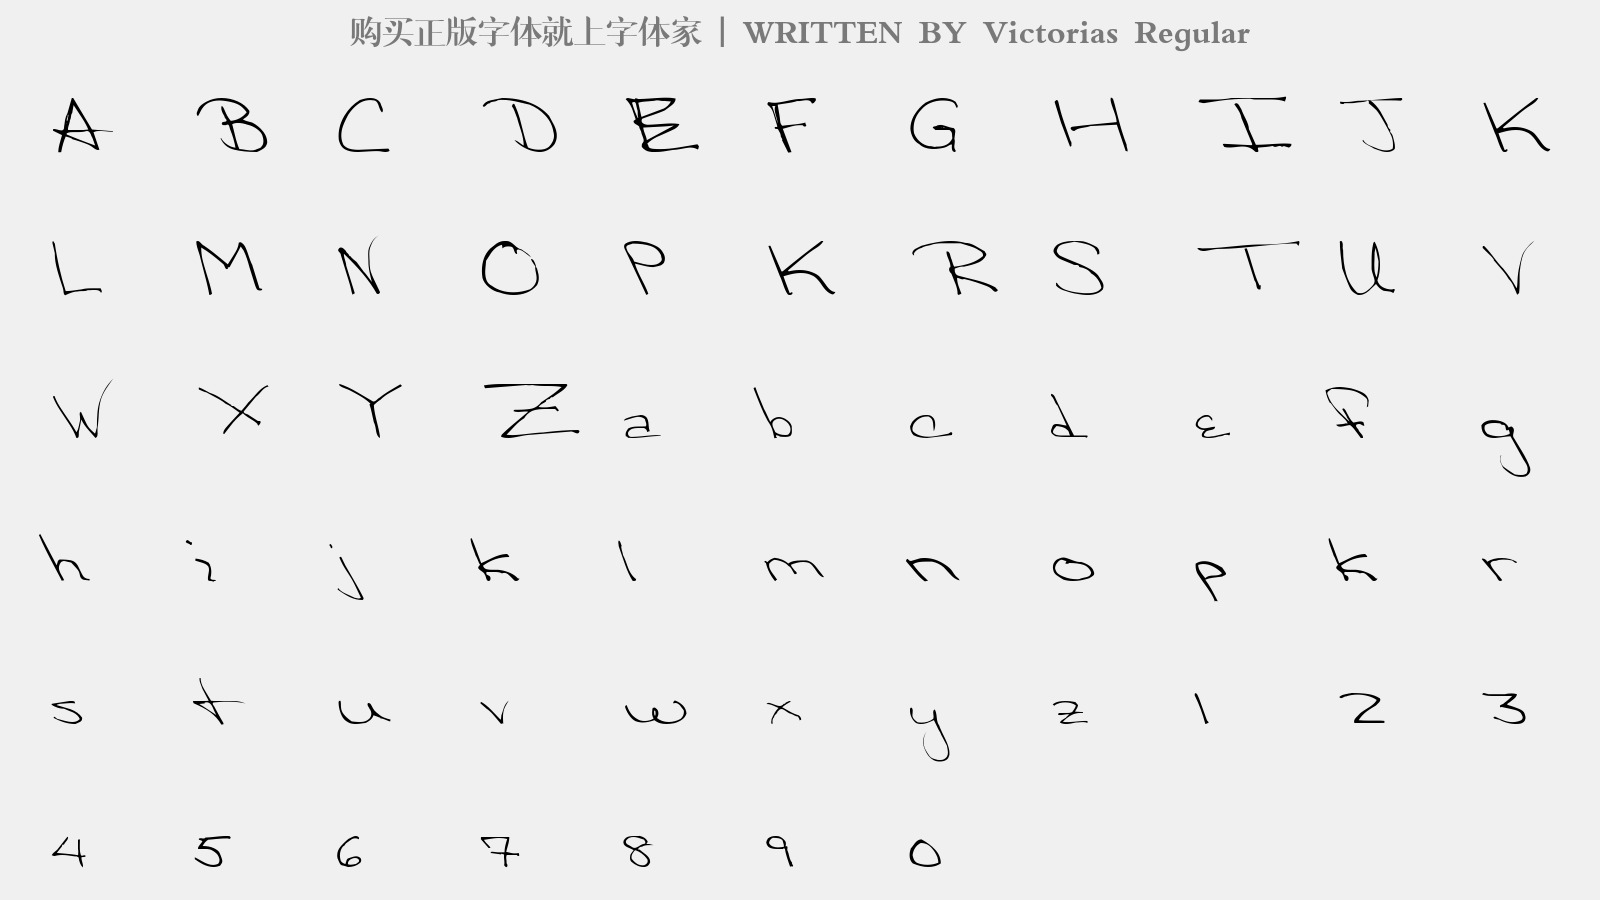 Victorias Regular - 大写字母/小写字母/数字